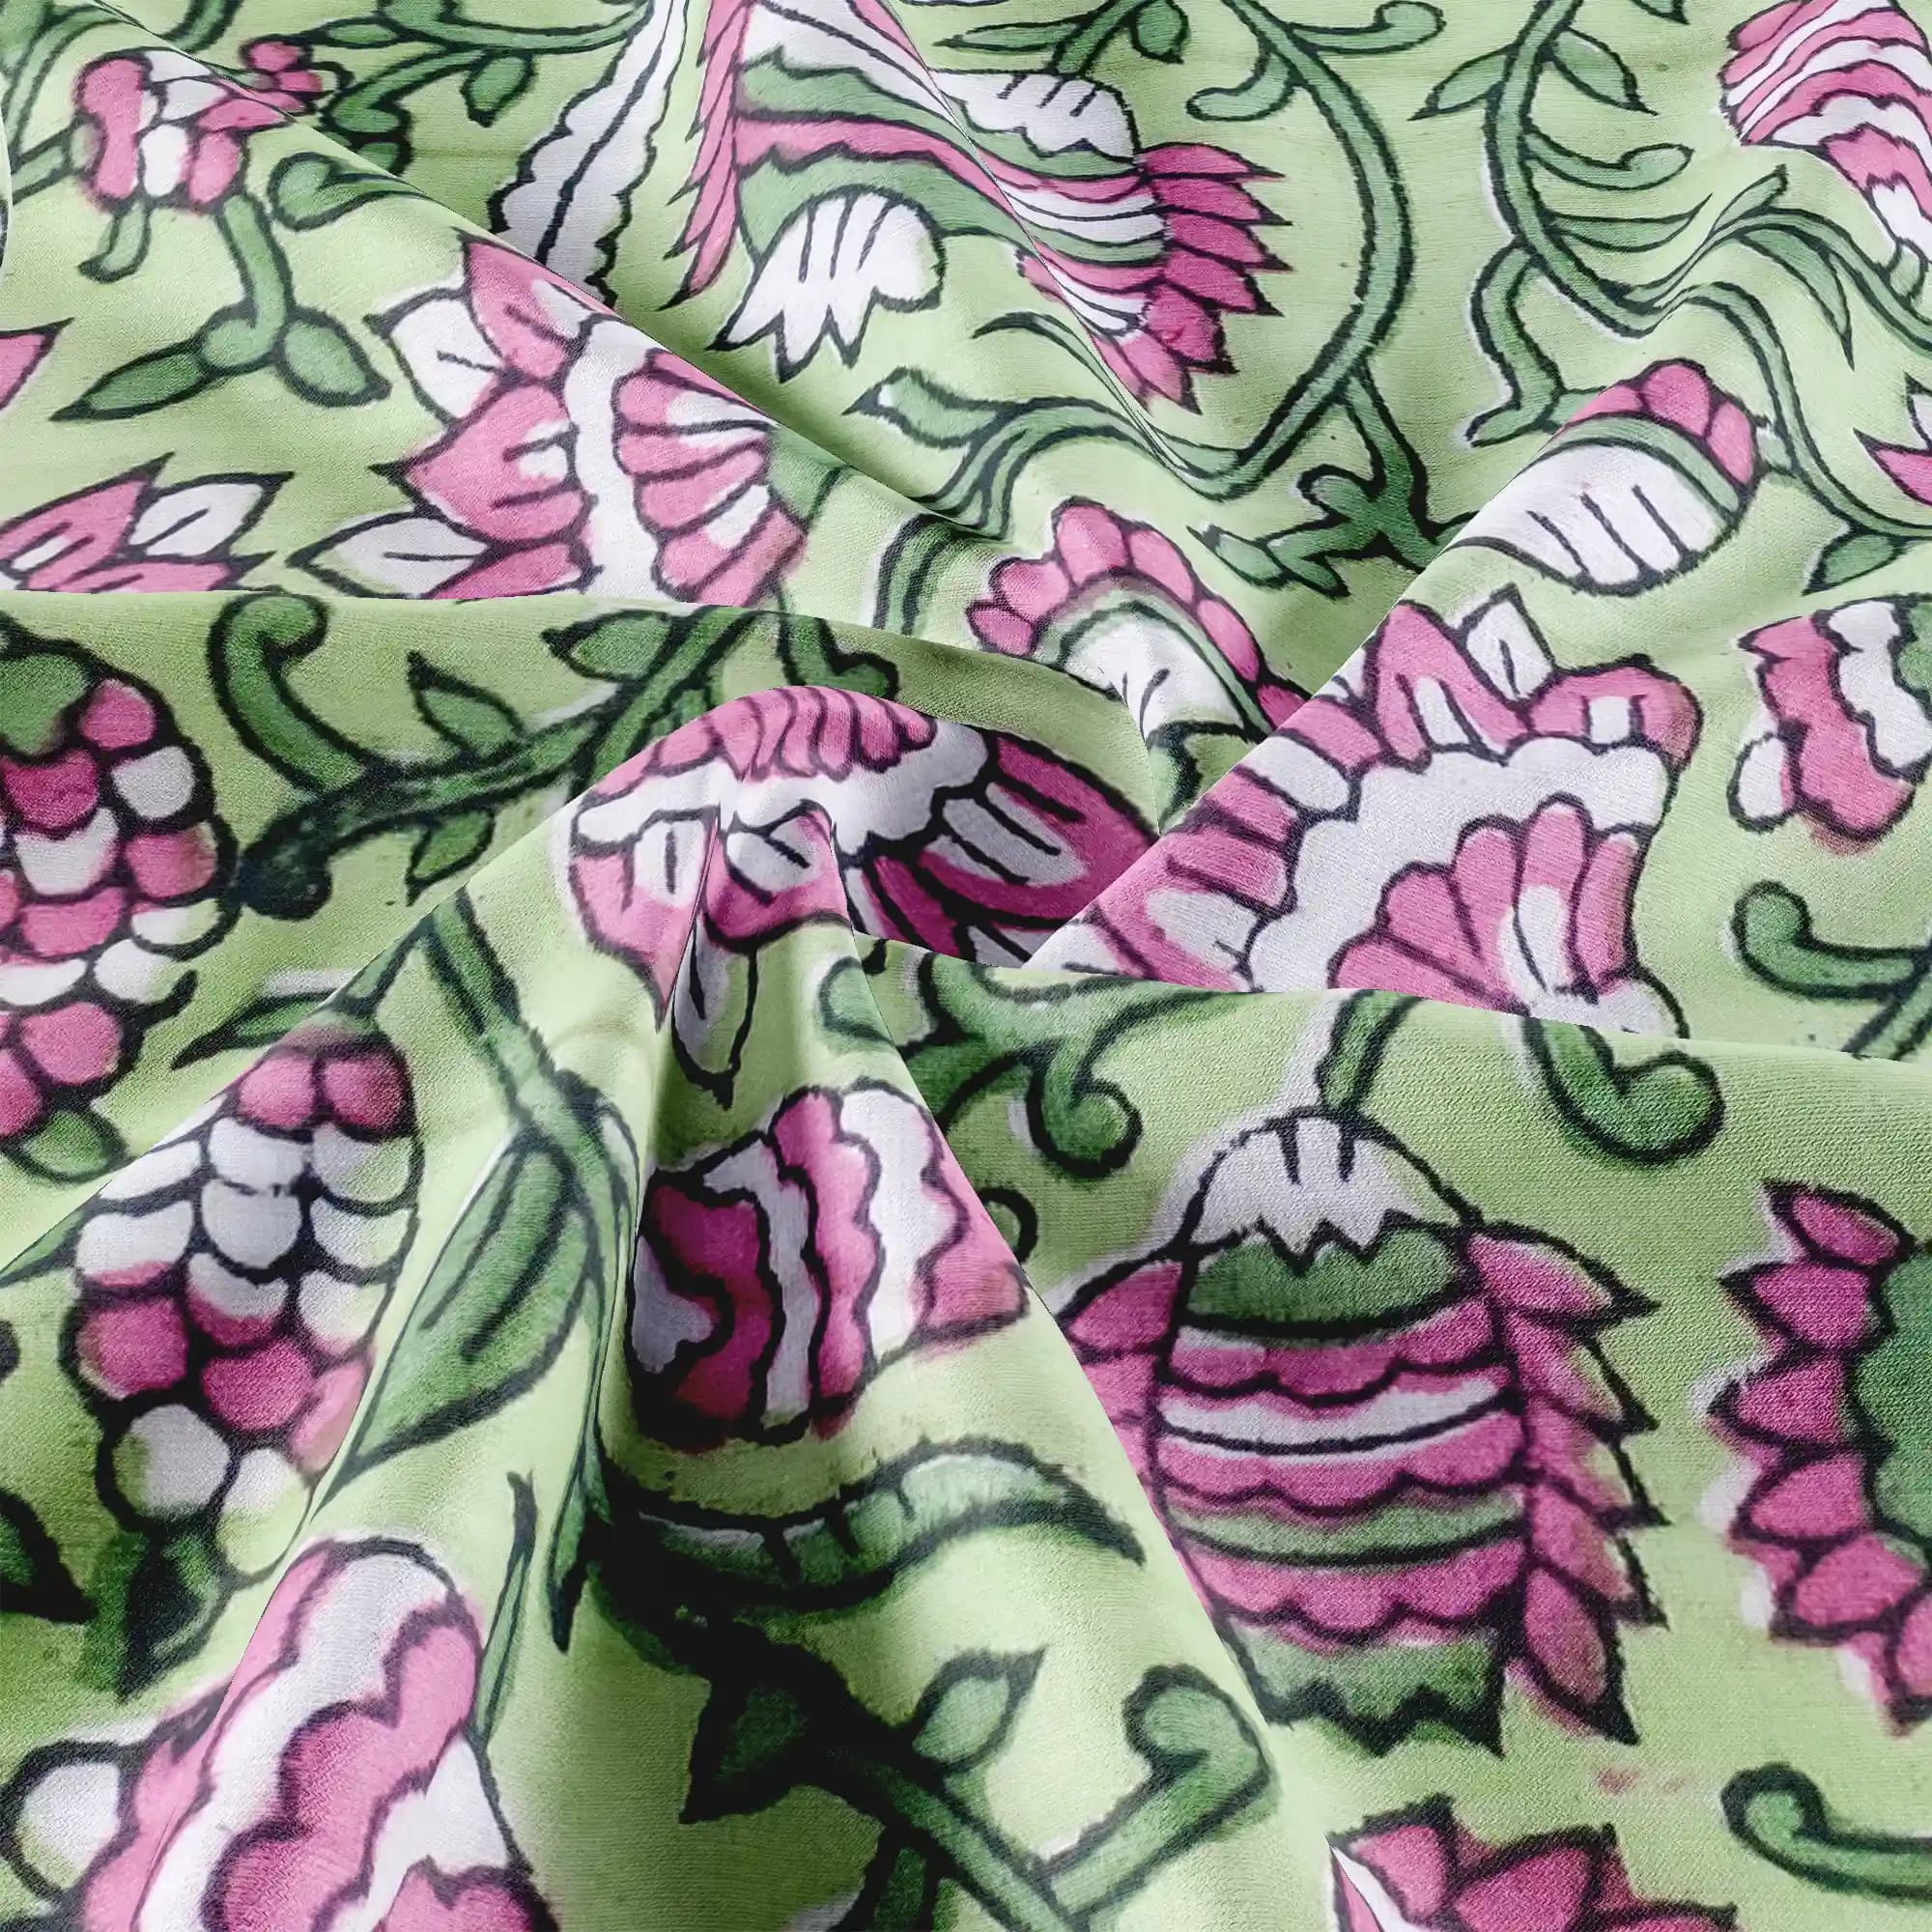 Jaipur Dohar Hand Block Printed Single Bed Cotton Dohar - Green Pink Dark Floral